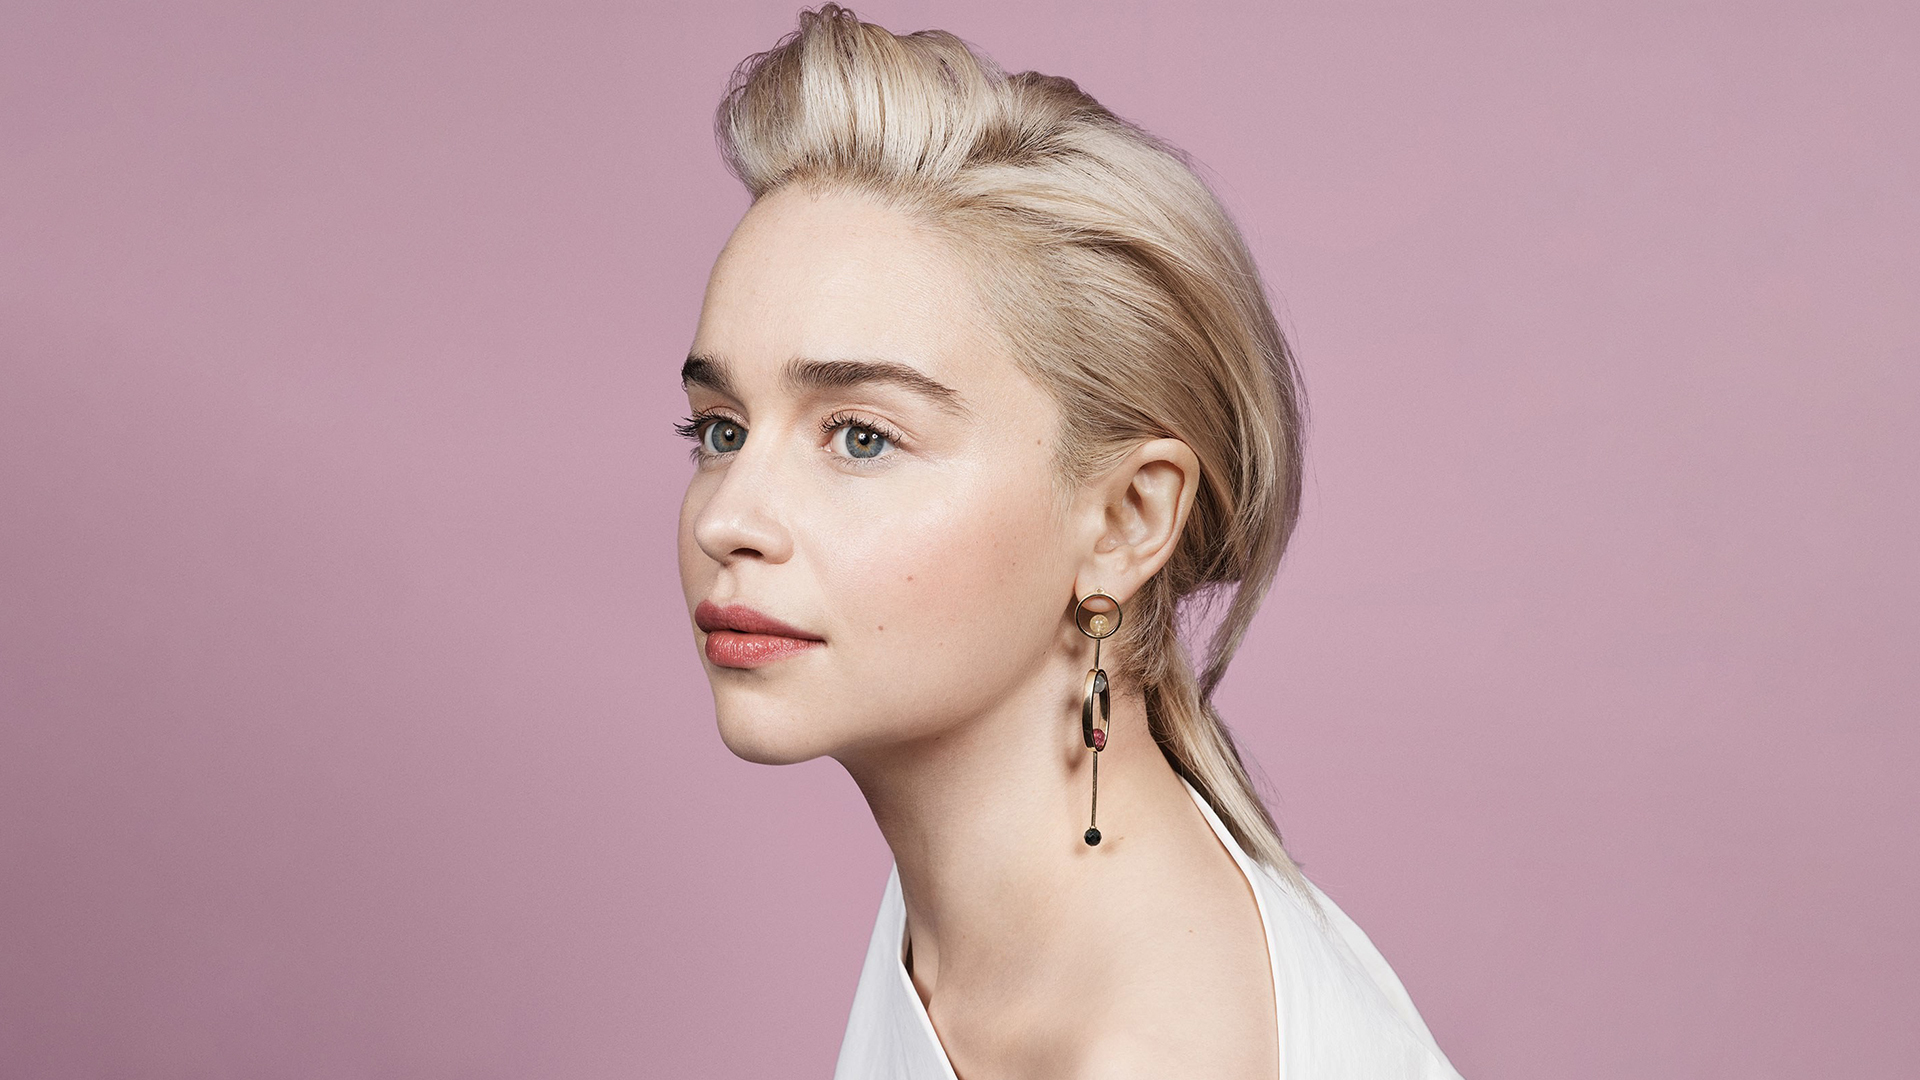 Emilia Clarke for Vanity Fair 2018 Wallpapers